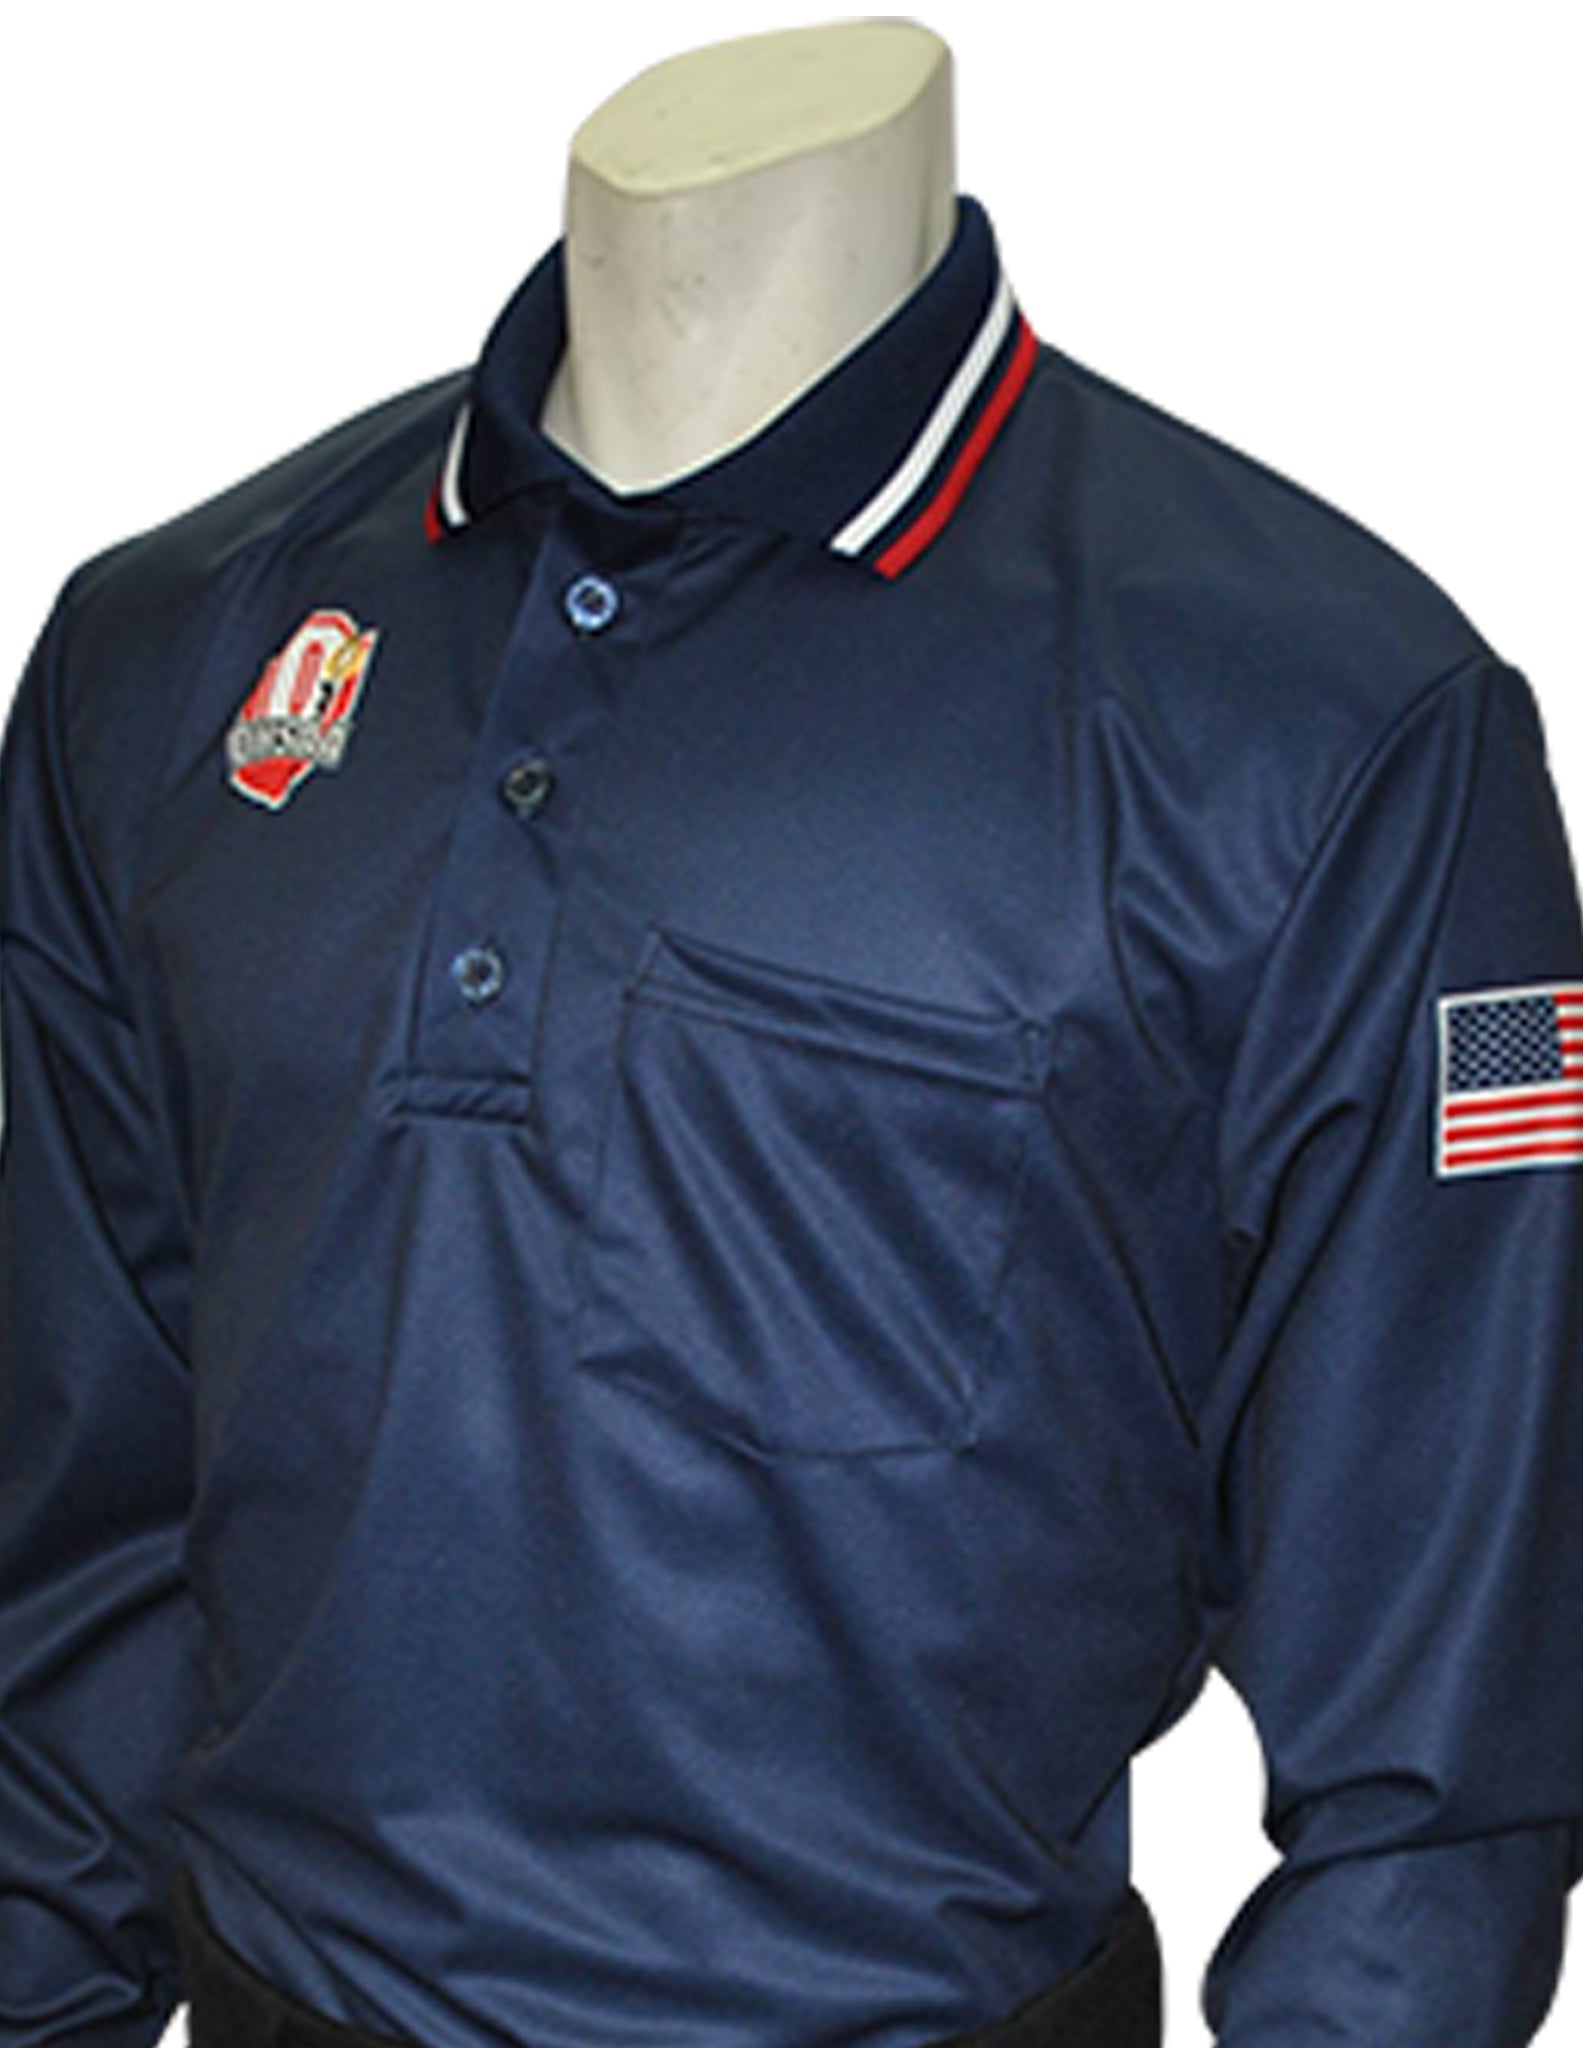 USA301 OH - Smitty "Made in USA" - "OHSAA" Long Sleeve Baseball Ump Shirt Navy